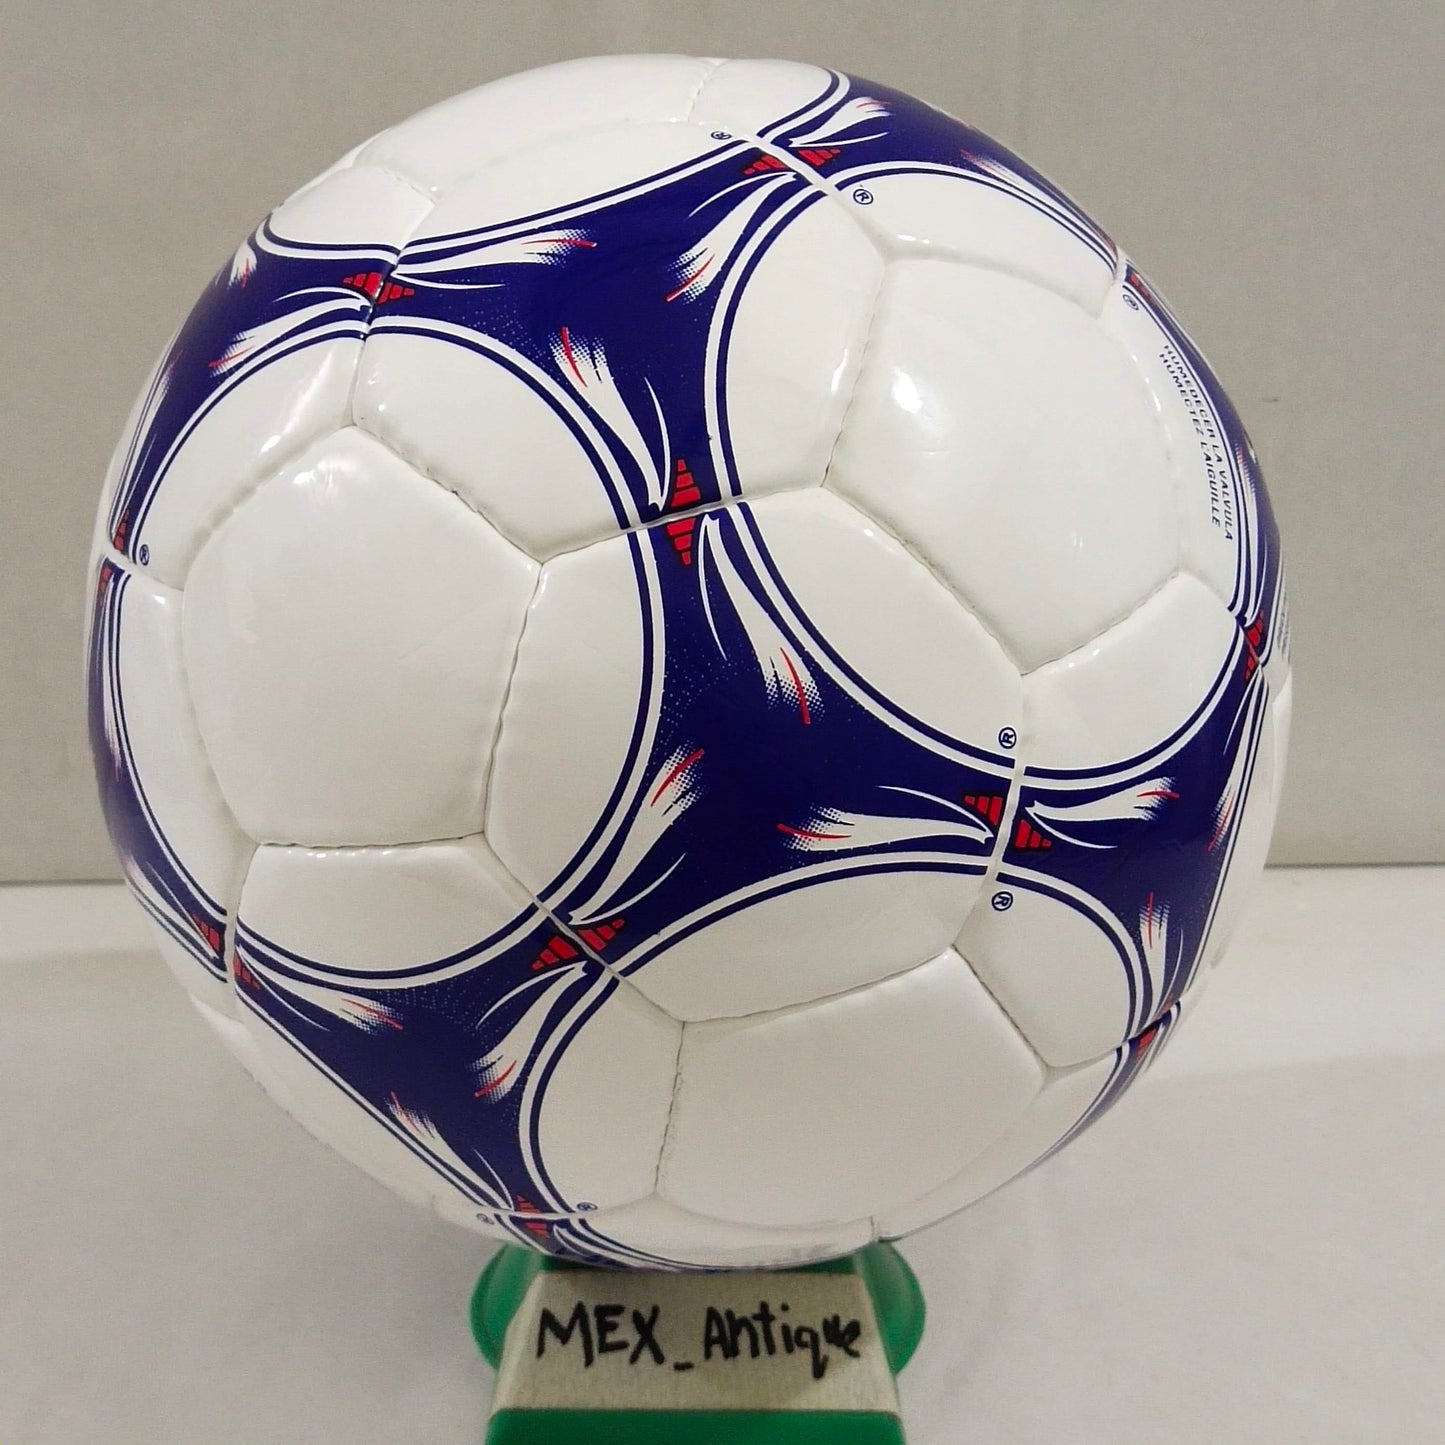 Adidas Tricolore | 1998 FIFA World Cup Ball | Made in Morrocco 06